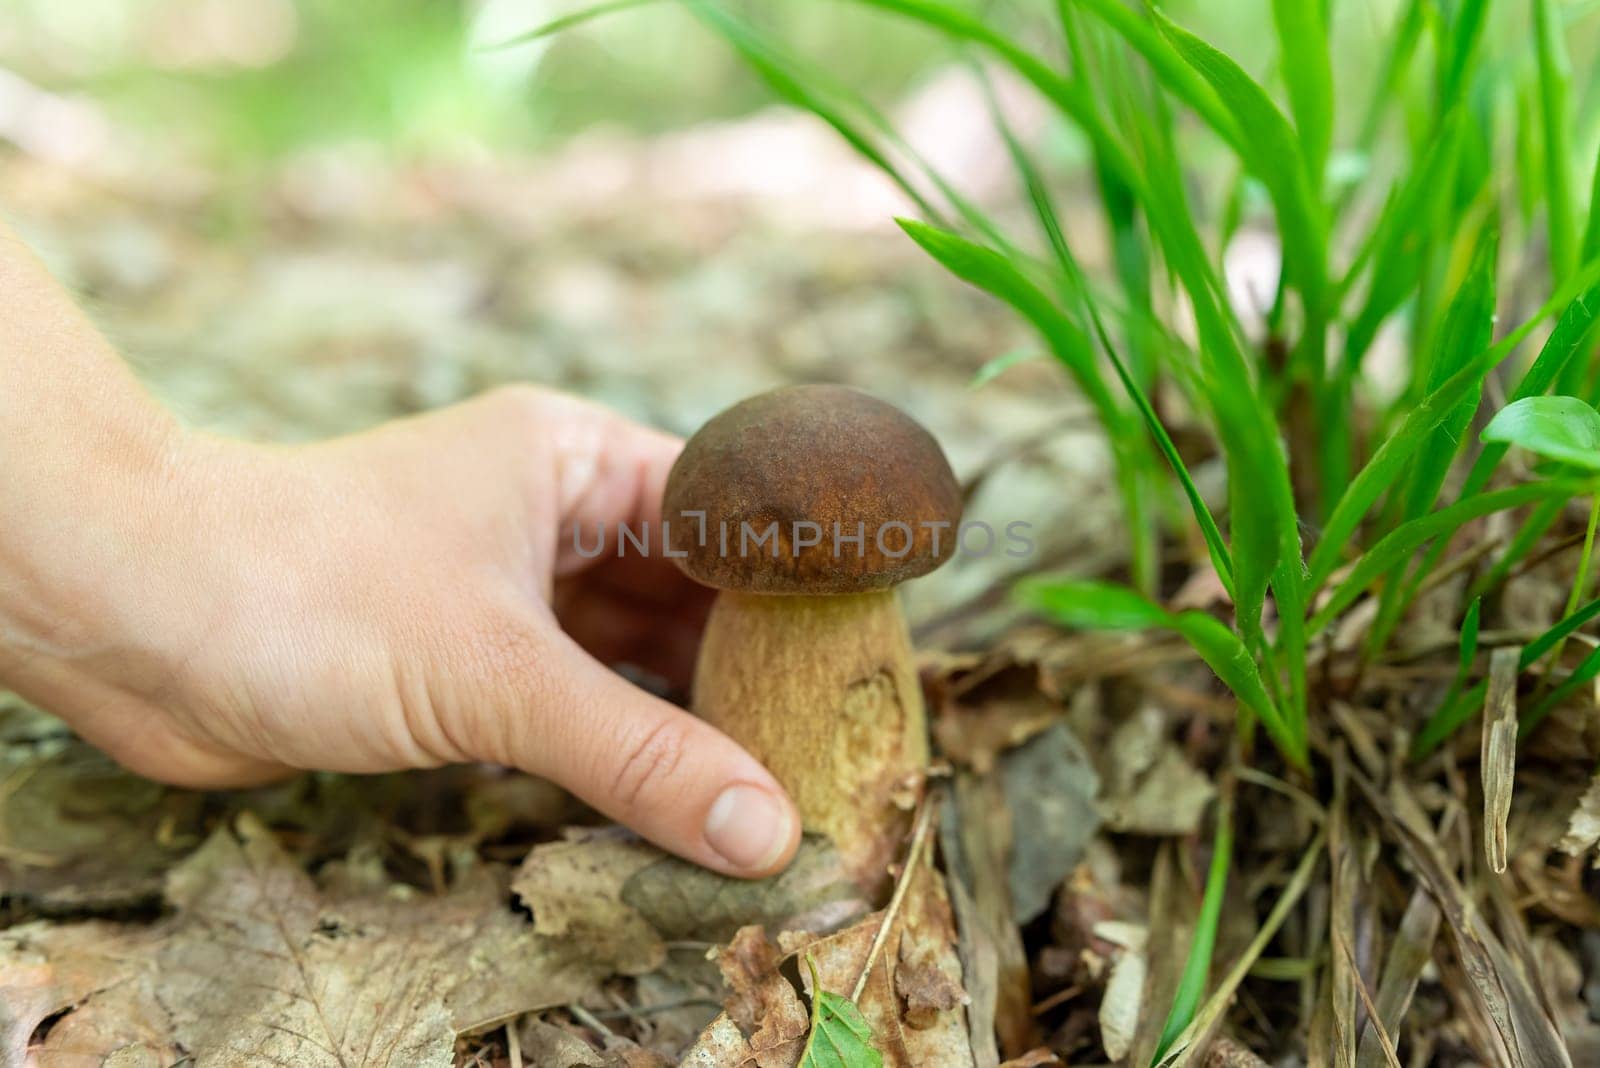 Picking mushrooms in forest by VitaliiPetrushenko